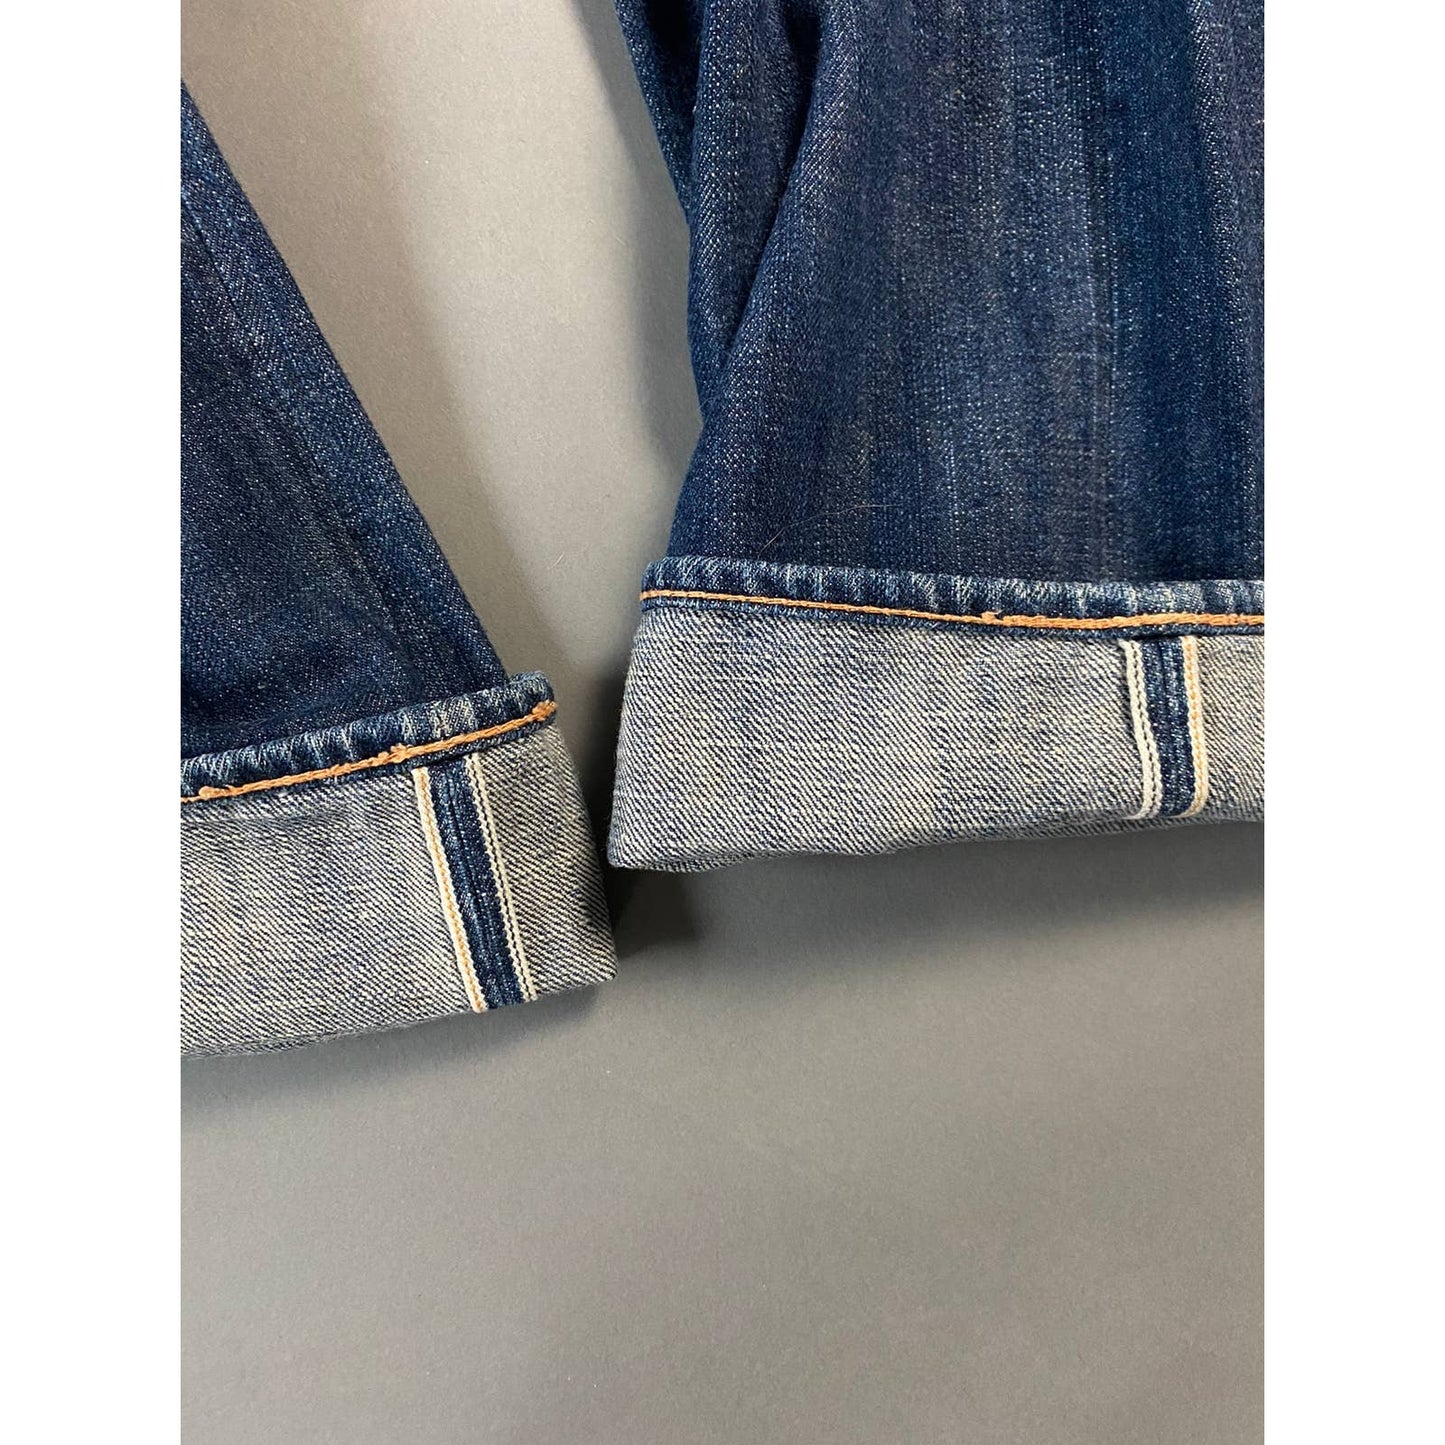 Evisu Yamane jeans vintage selvedge denim Japan